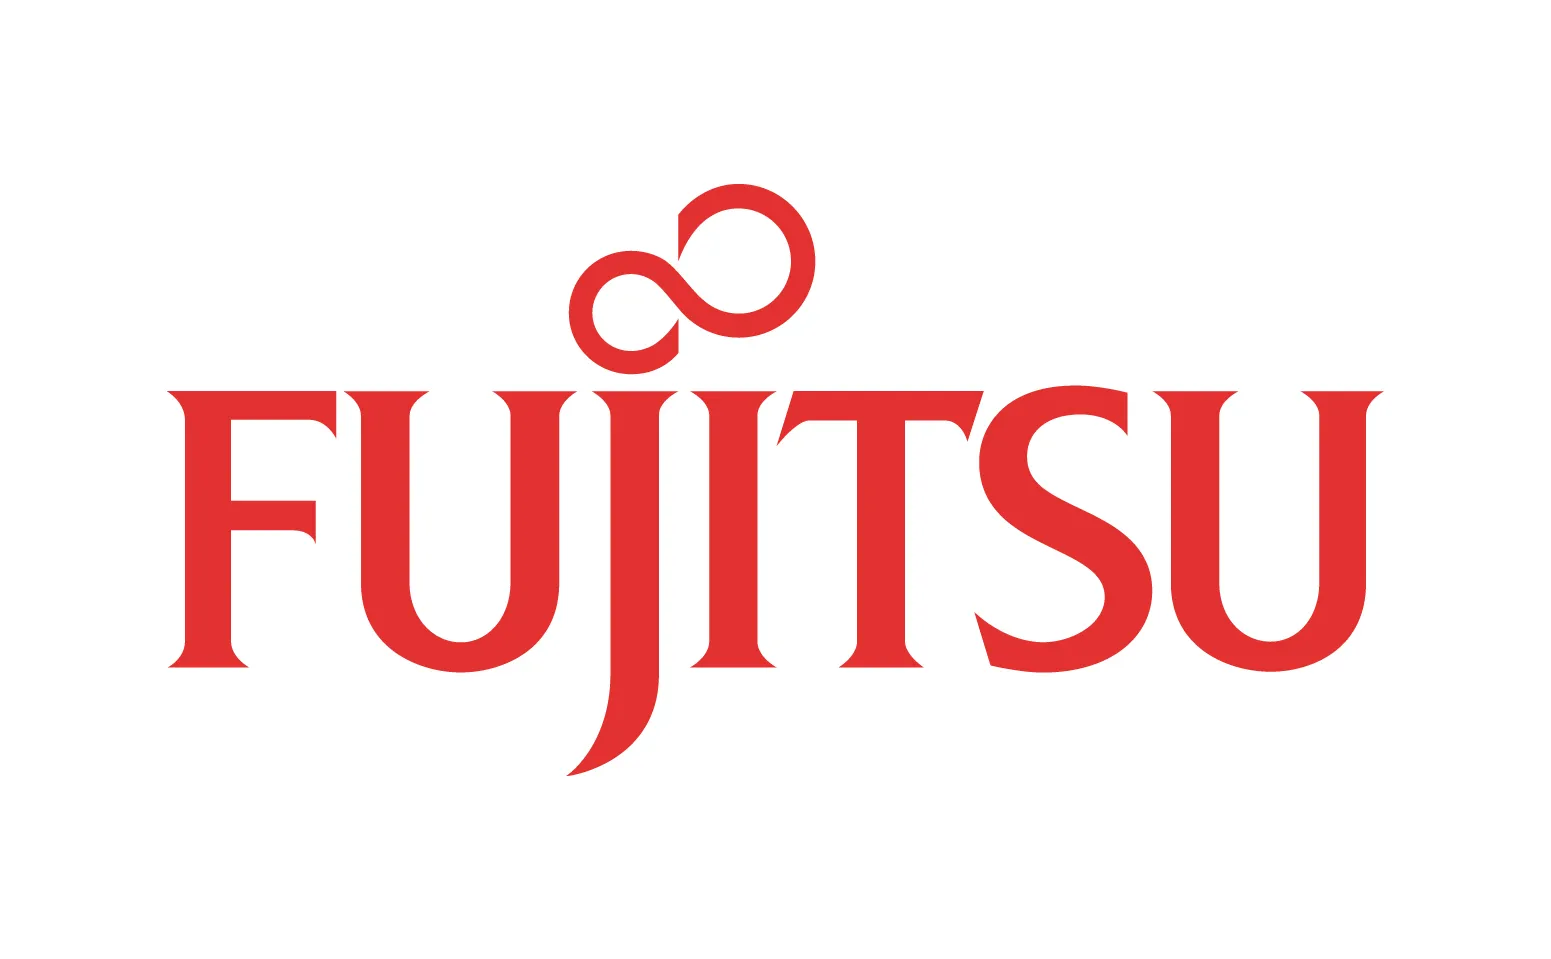 Vente FUJITSU eLCM Activation Pack Fujitsu au meilleur prix - visuel 2